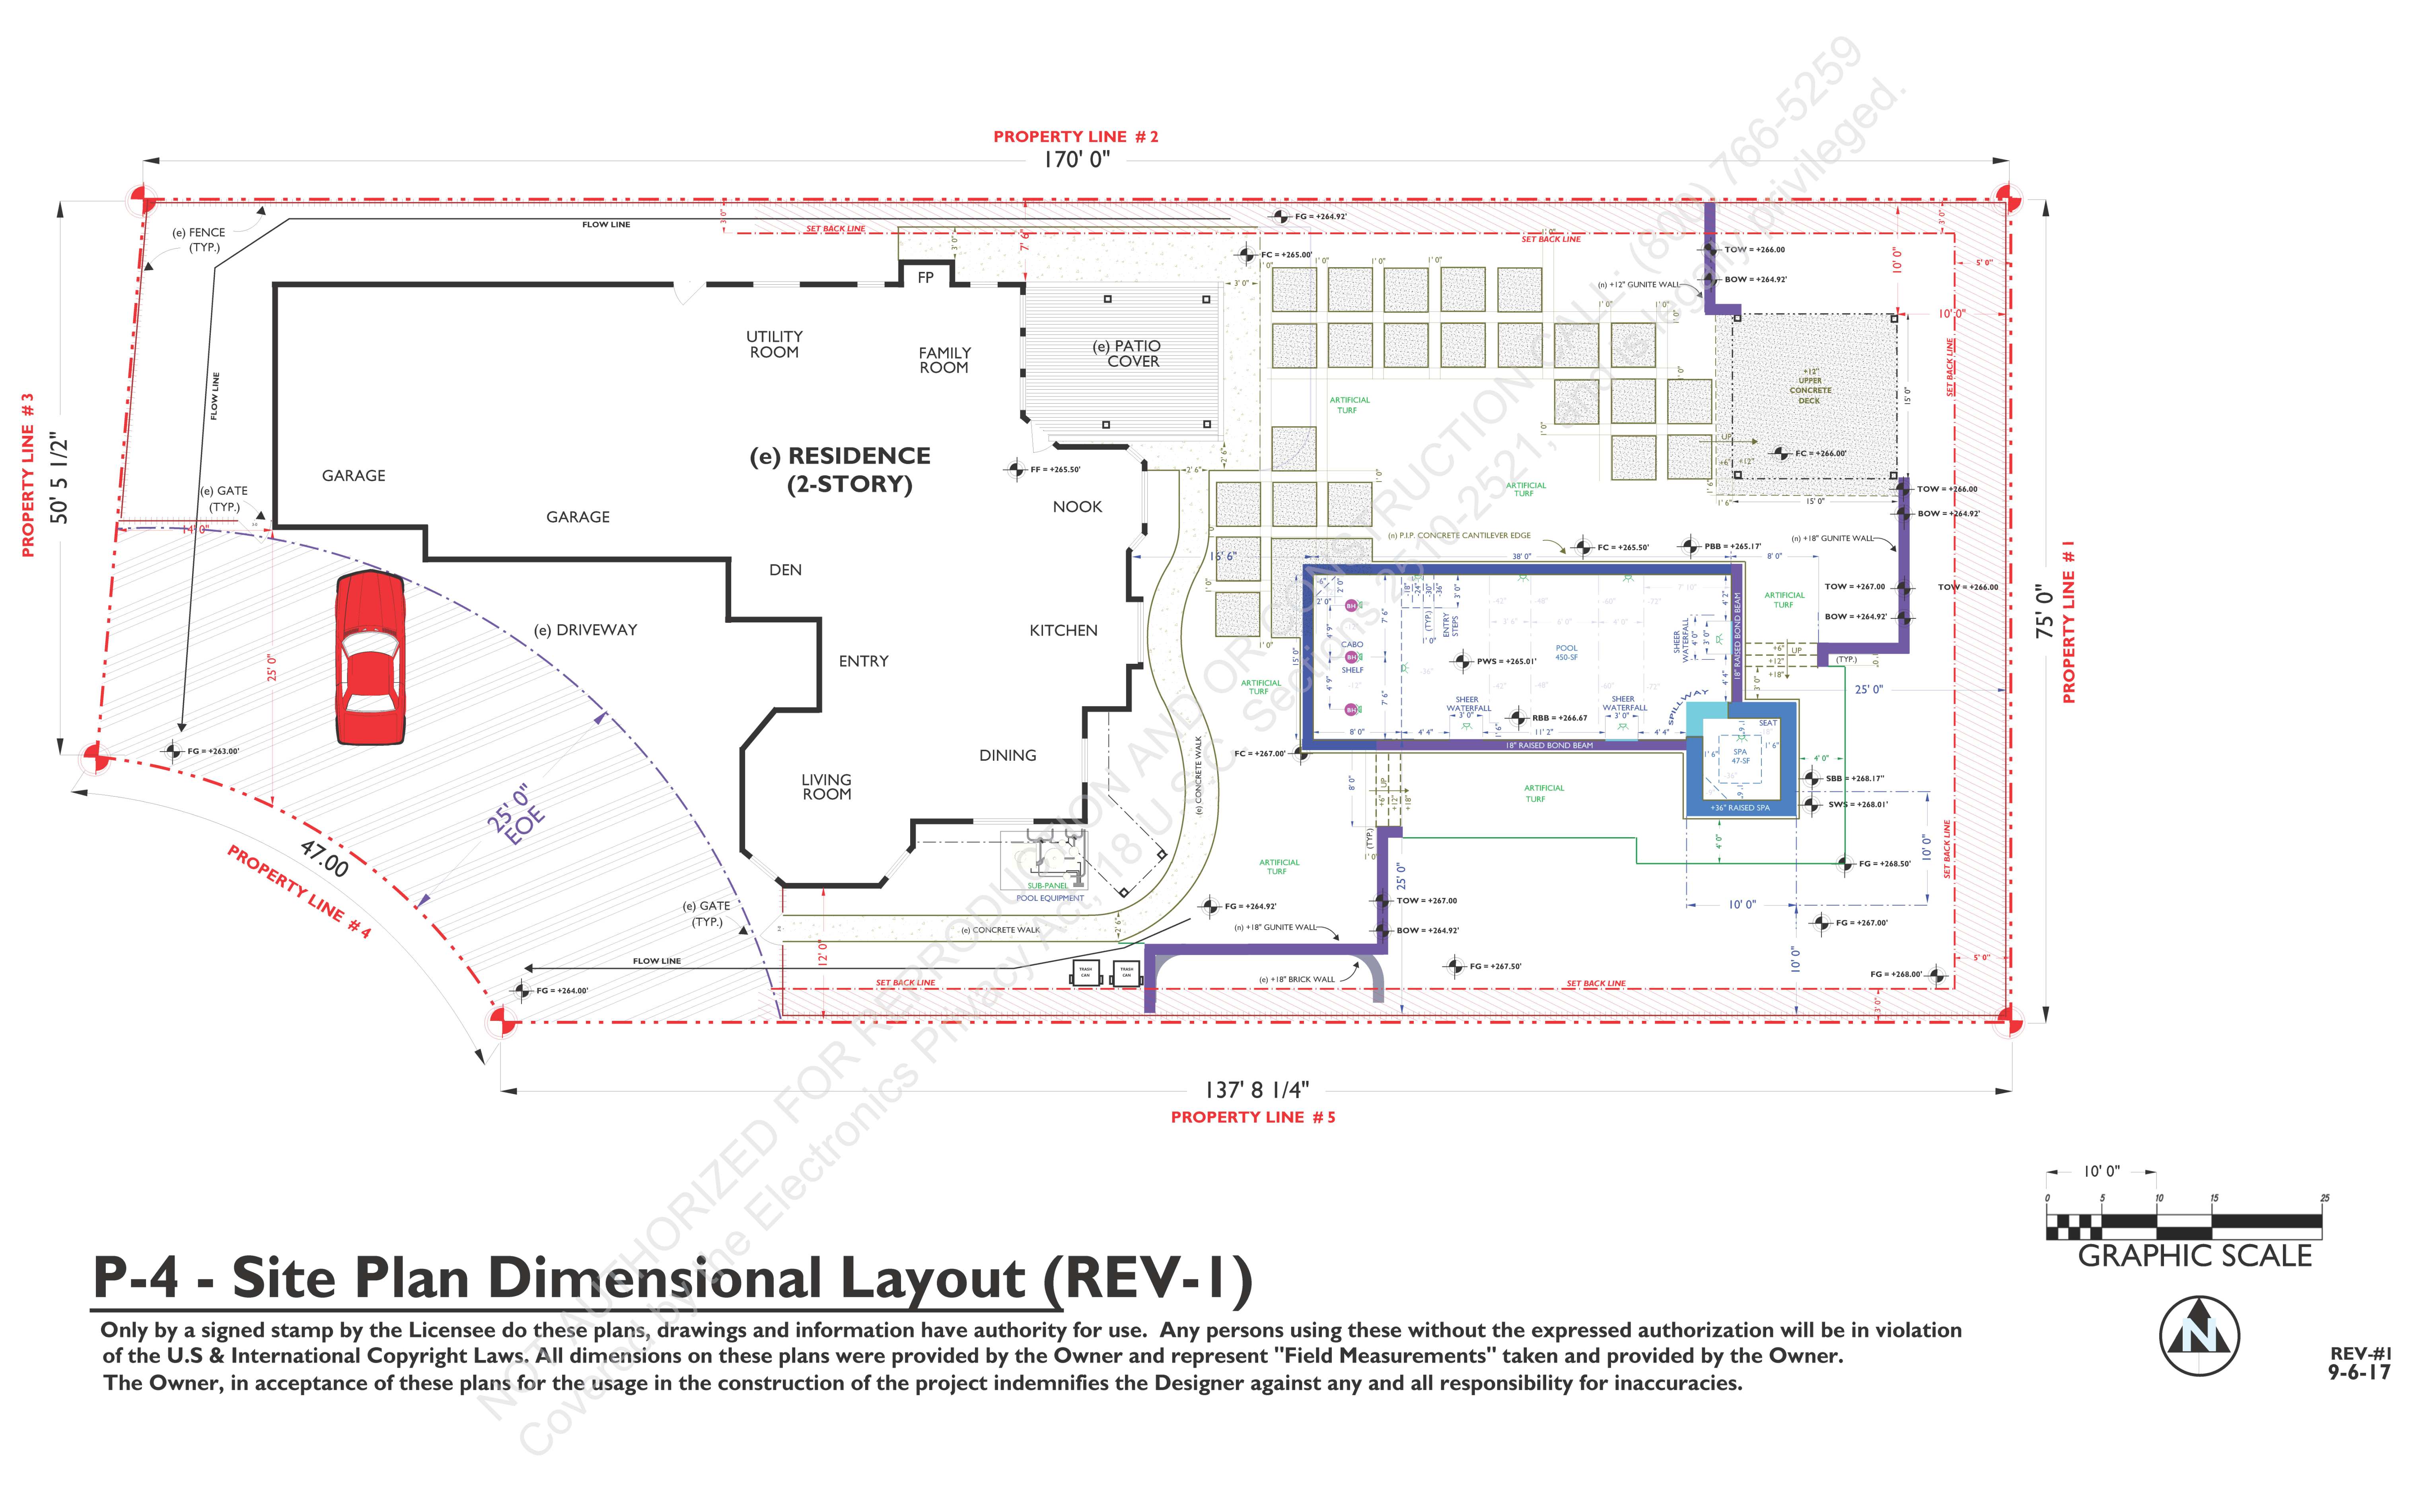 P-4 Site Plan Dimensional Layout